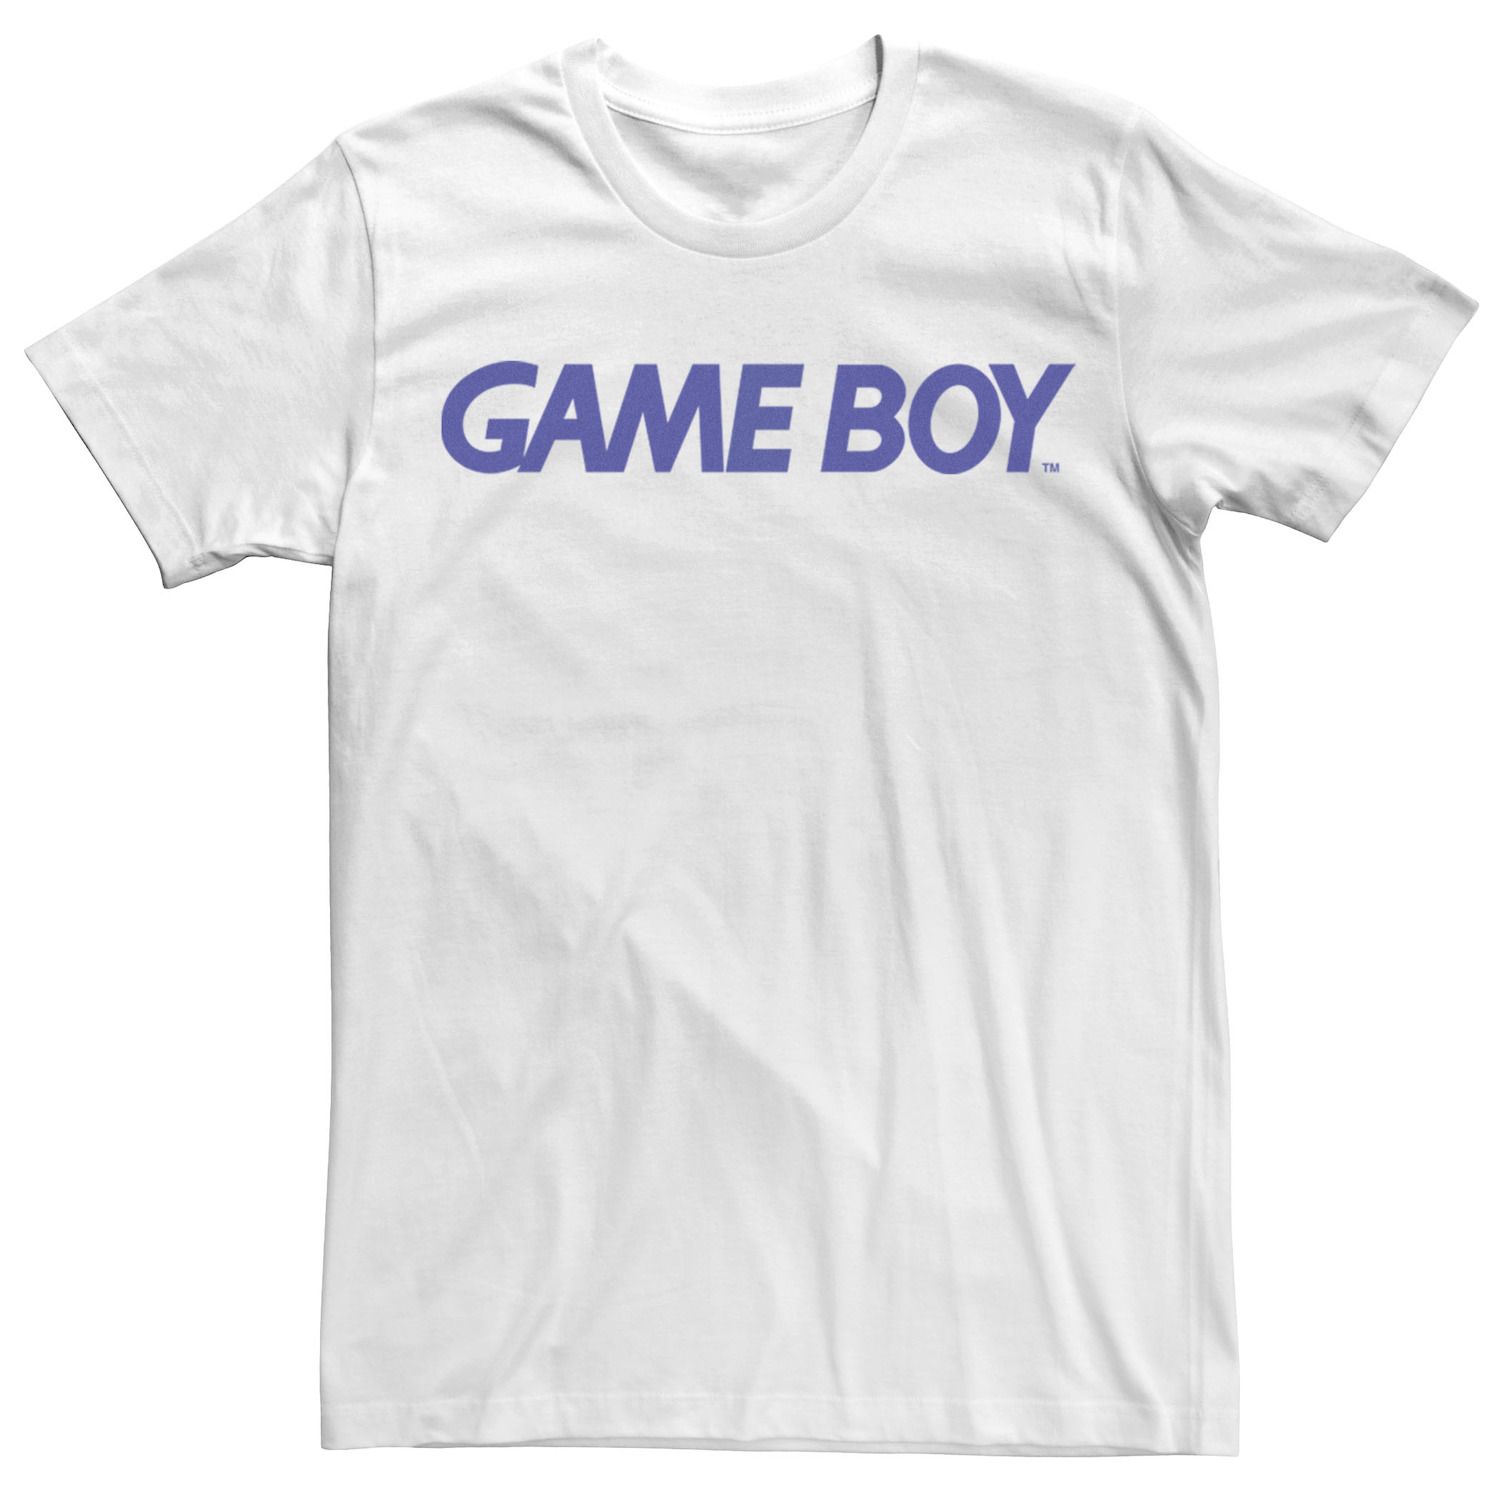 Мужская футболка с простым логотипом Nintendo Gameboy Licensed Character